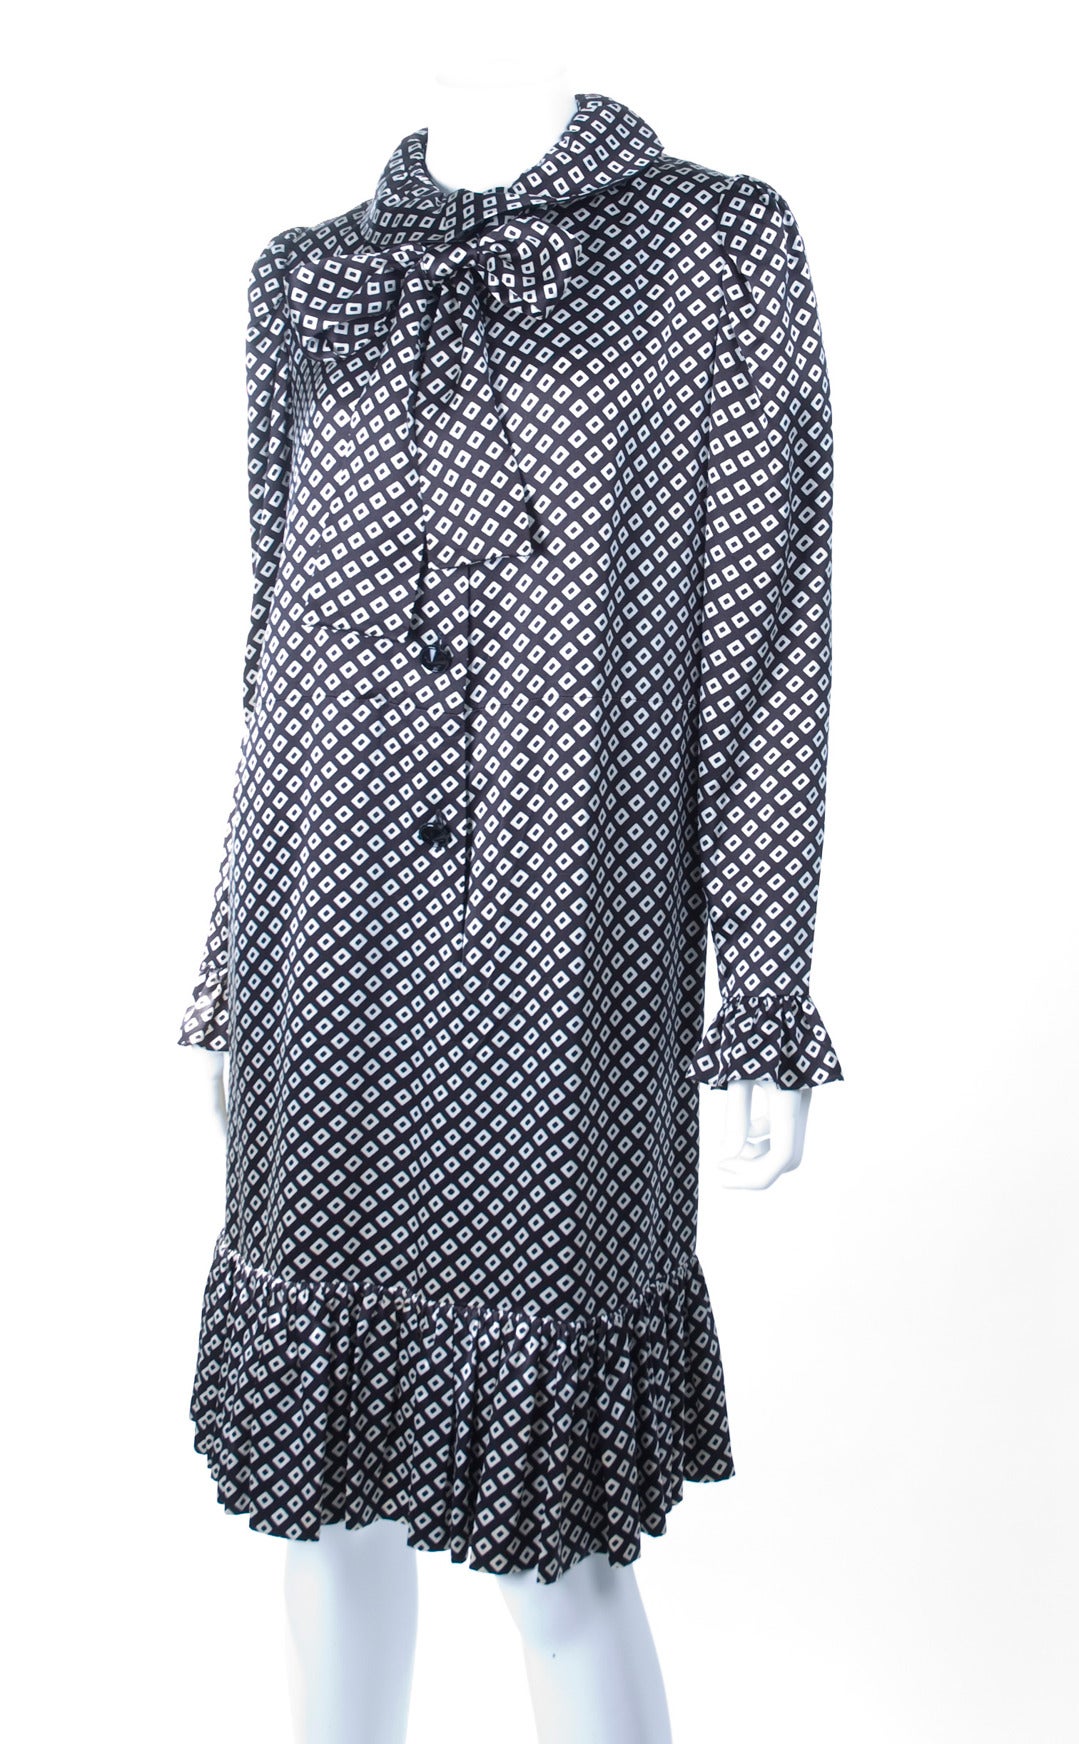 Vintage 1980s Givenchy Boutique Silk Satin Dress In Excellent Condition For Sale In Hamburg, Deutschland